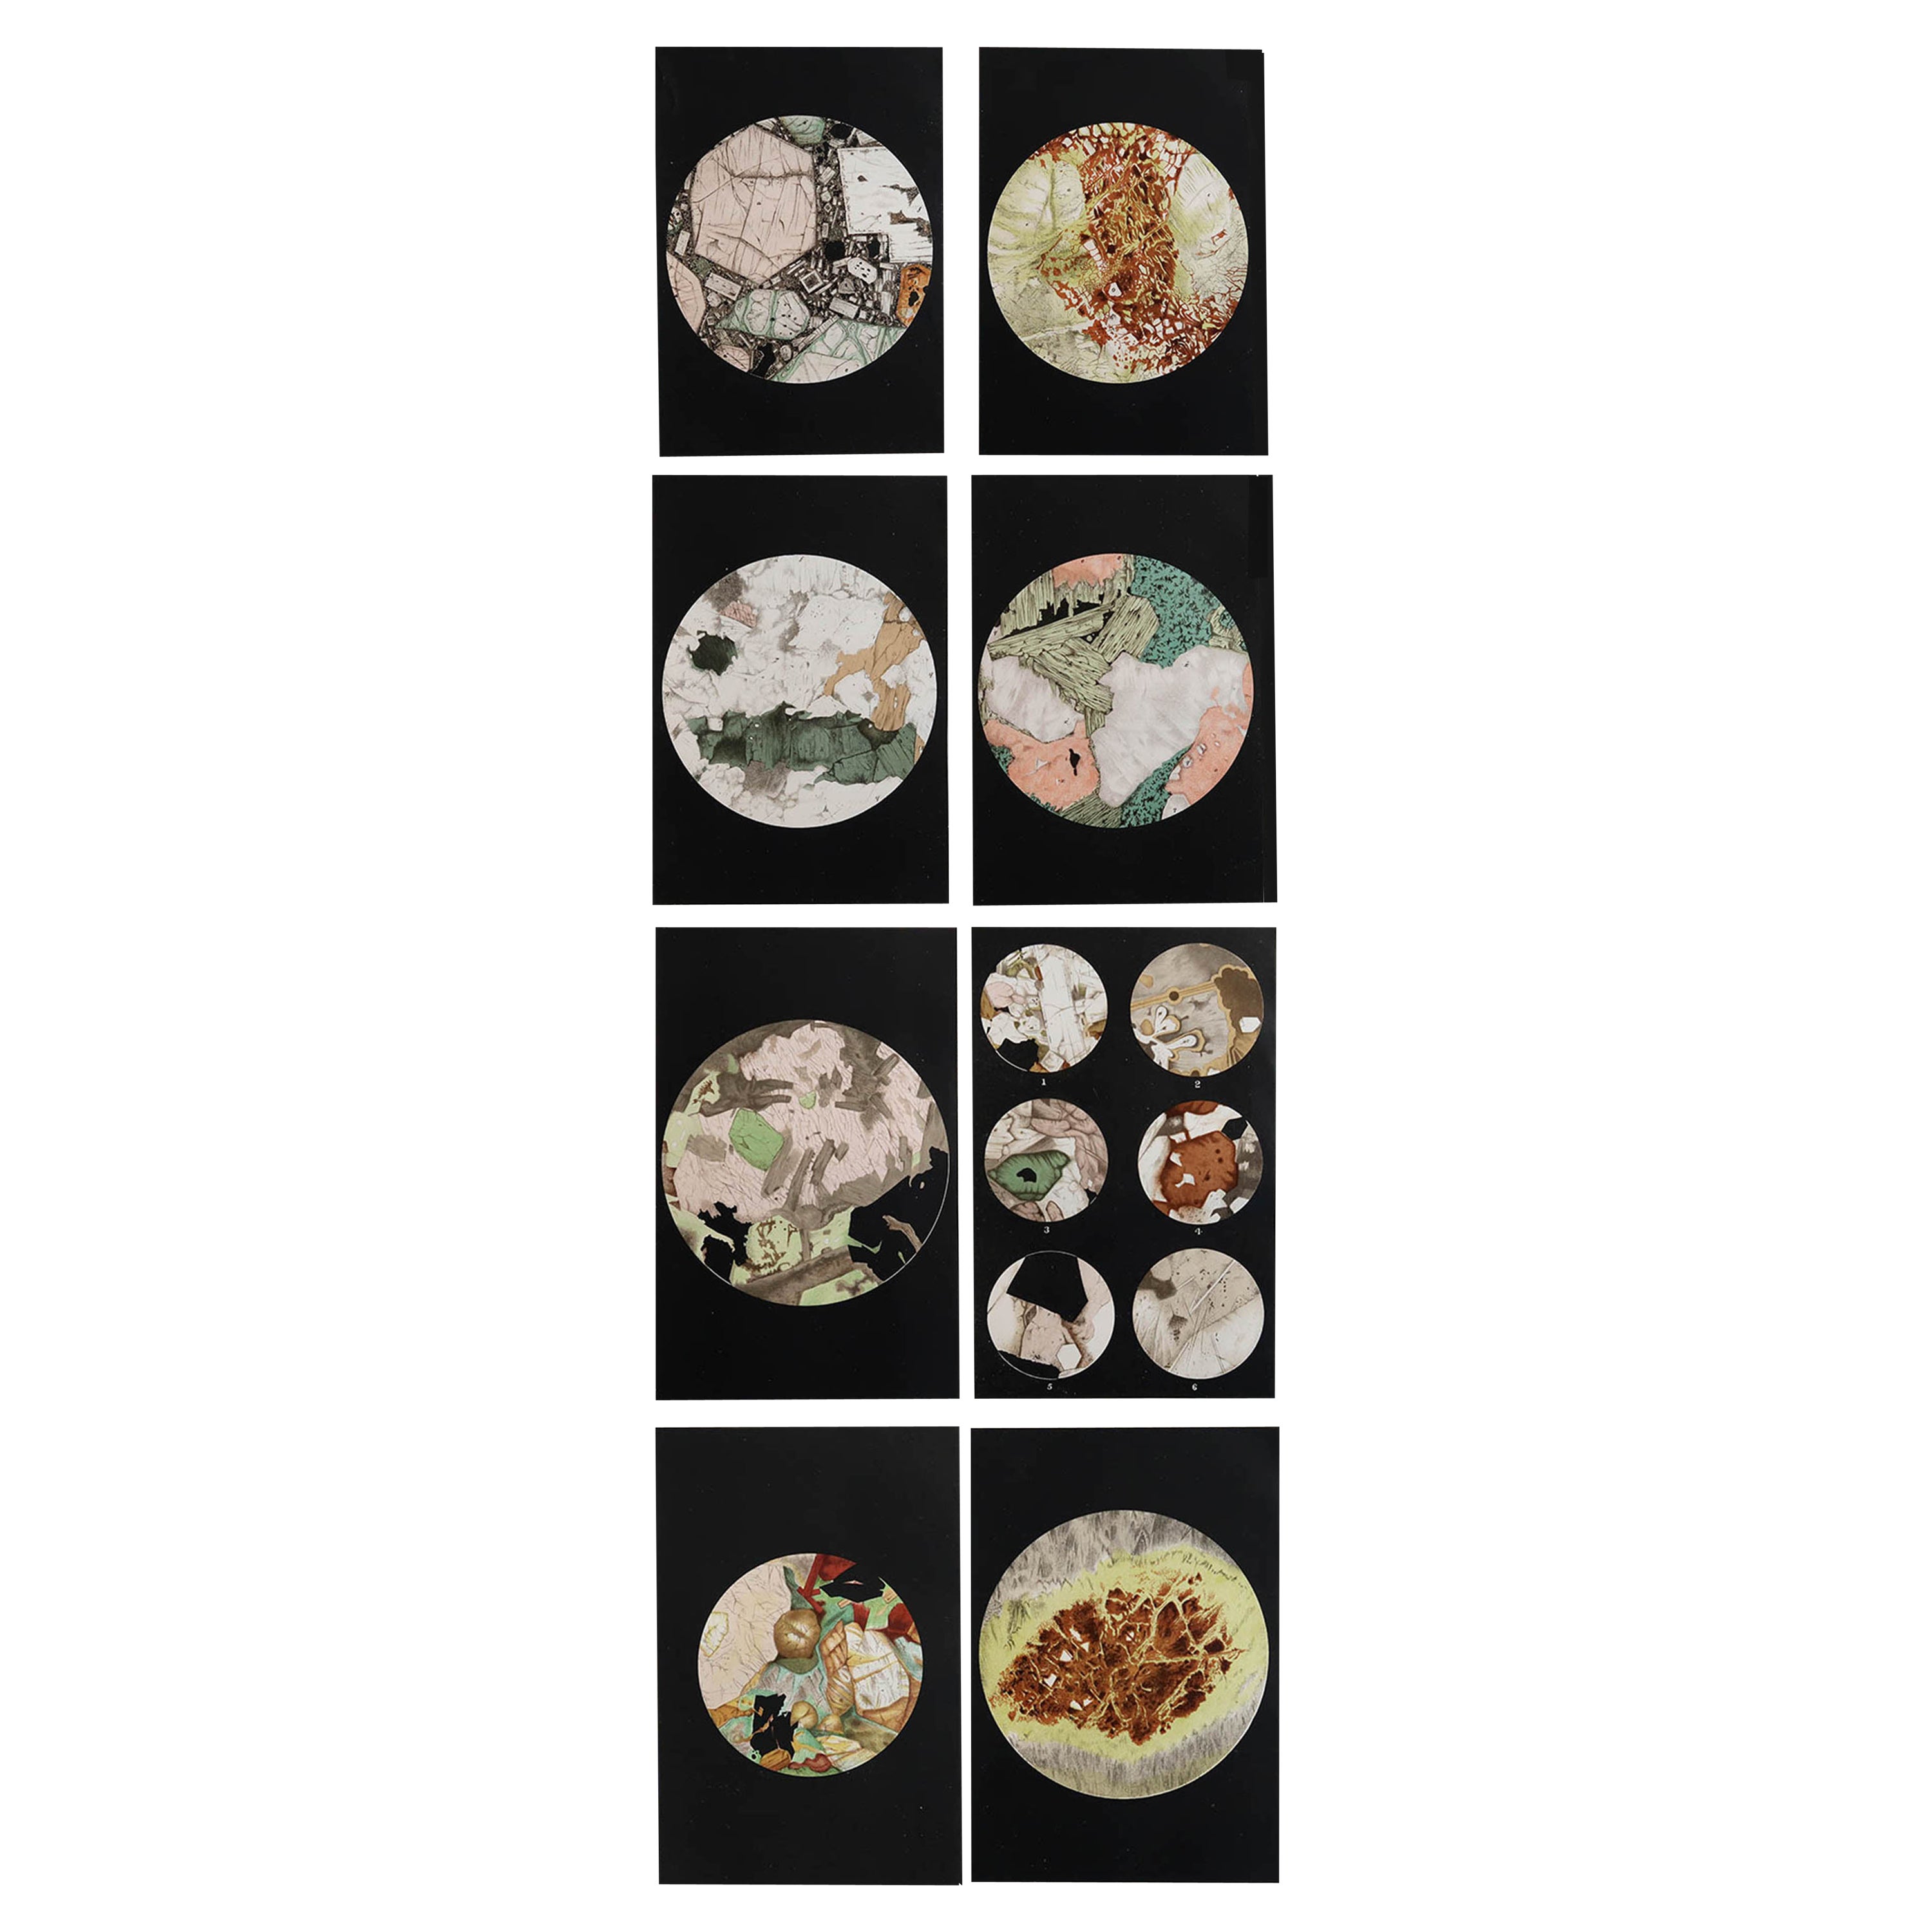 Set of 8 Original Antique Prints of Microscopic Rock Samples, 1883